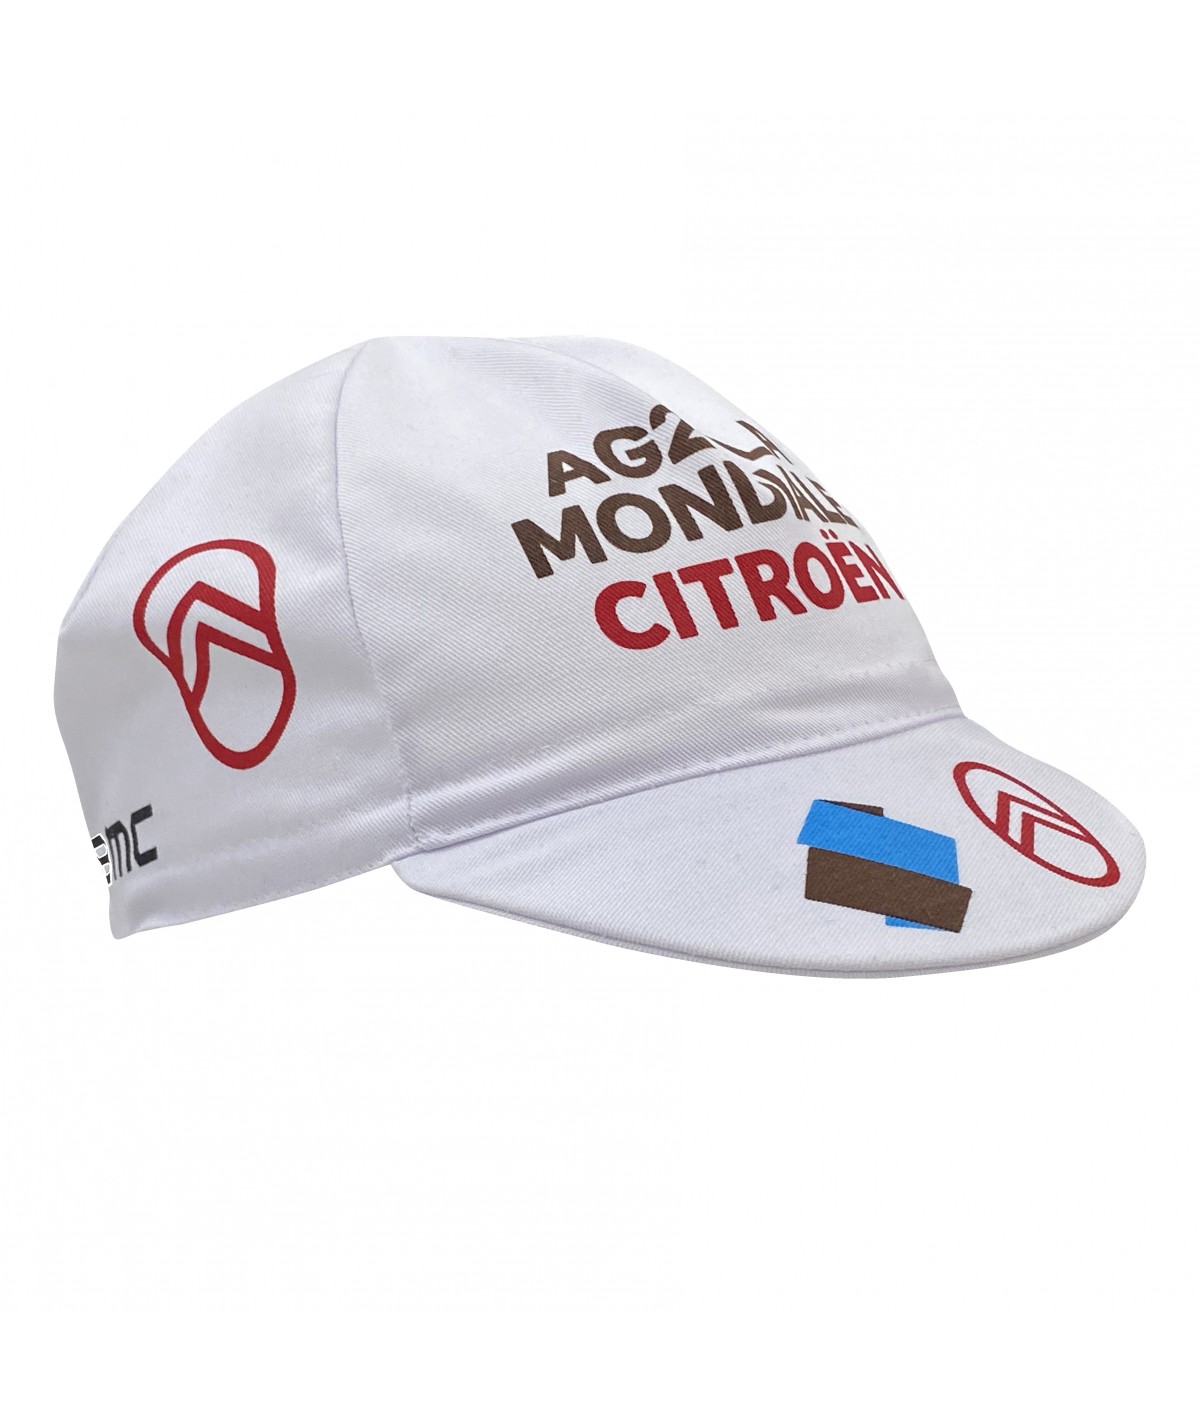 Citroën Team AG2R cotton cycling cap